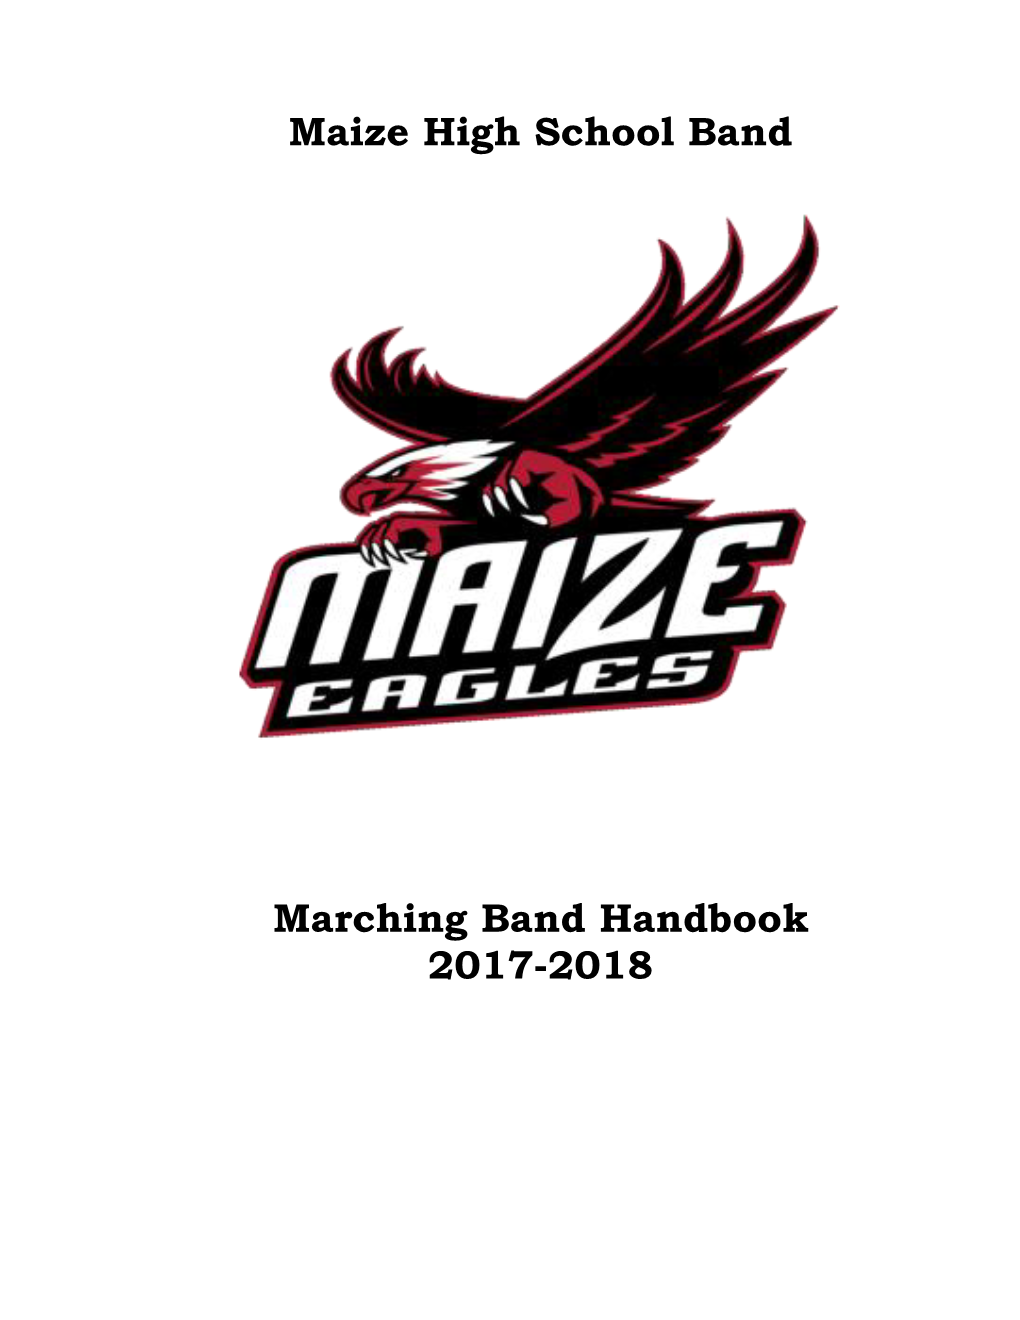 Maize High School Band Marching Band Handbook 2017-2018